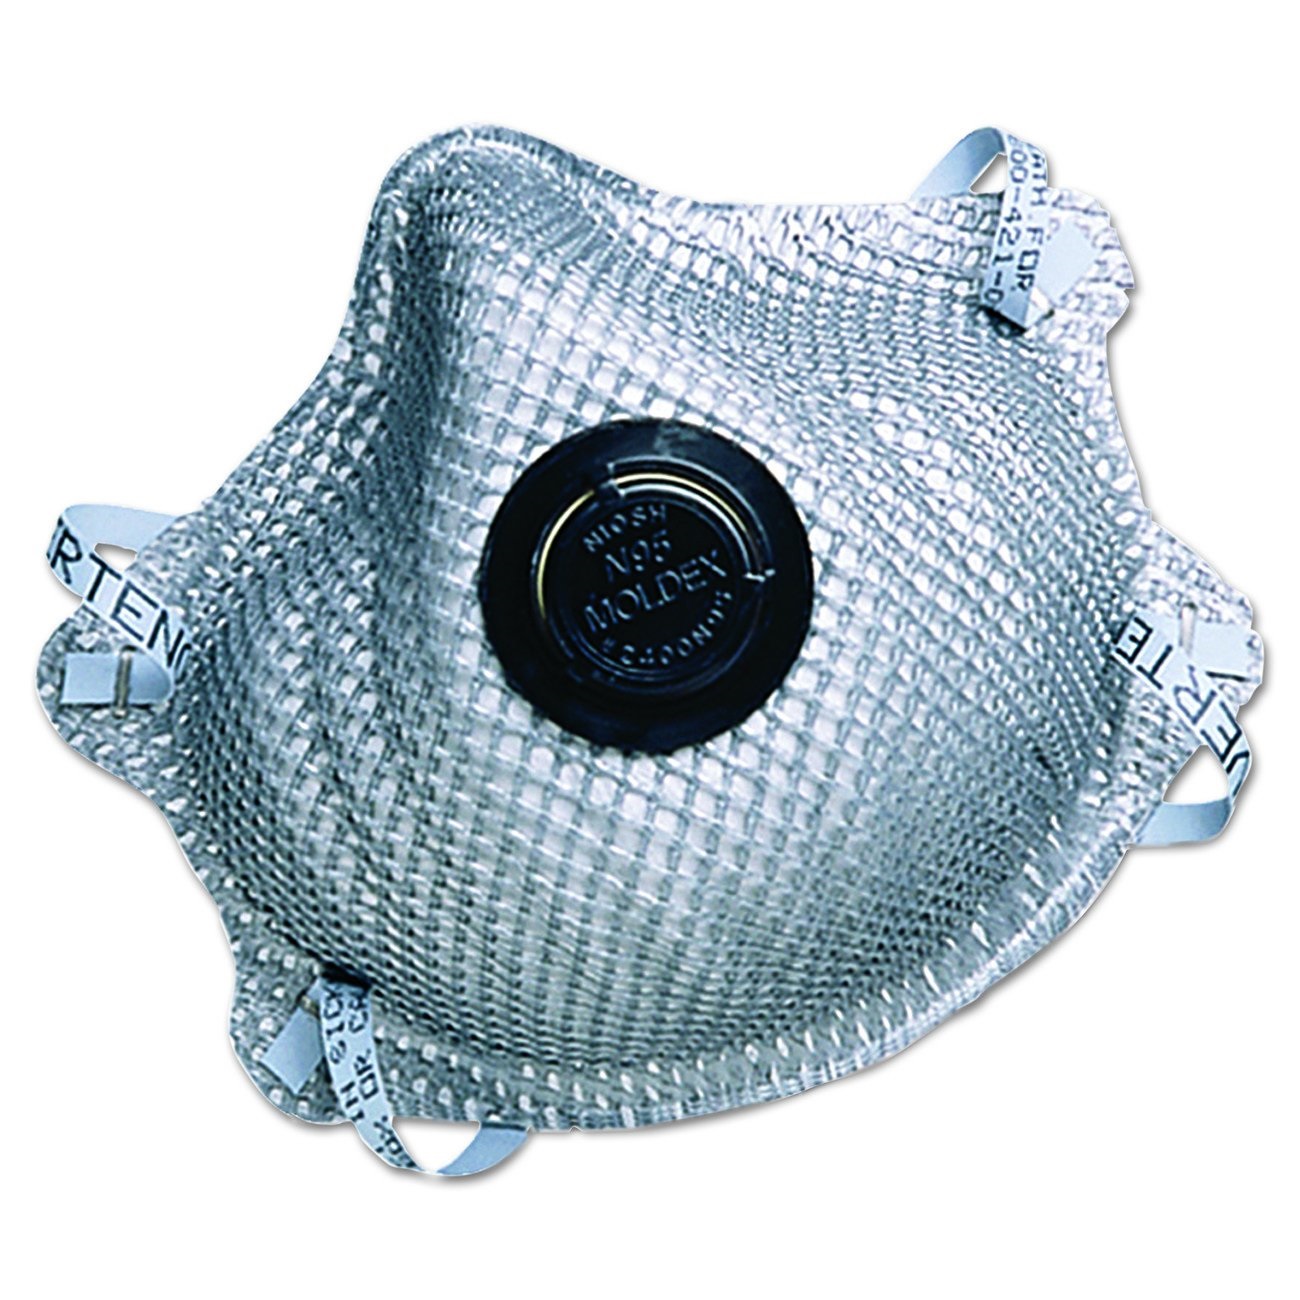 Moldex 2400N95 Organic Vapor Respirator with Charcoal Filter